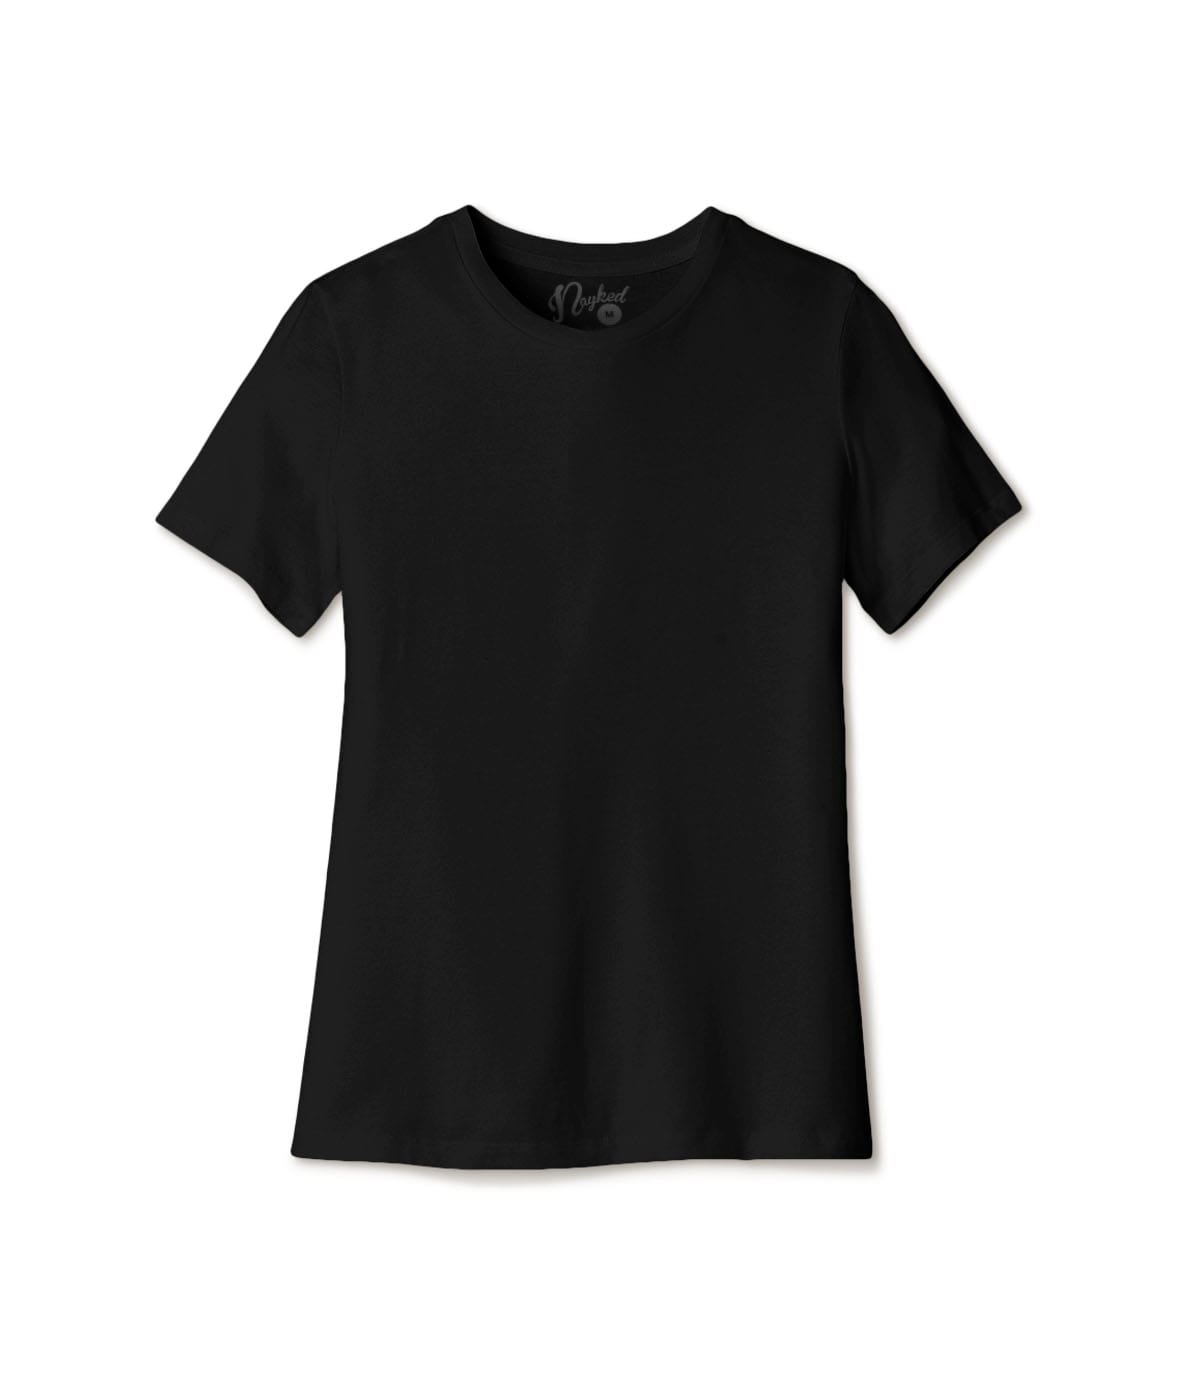 regering sarkom medaljevinder Shop Nayked Apparel Women's Ridiculously Soft Relaxed Fit 100% Cotton T- Shirt | Comfort sweatpants.